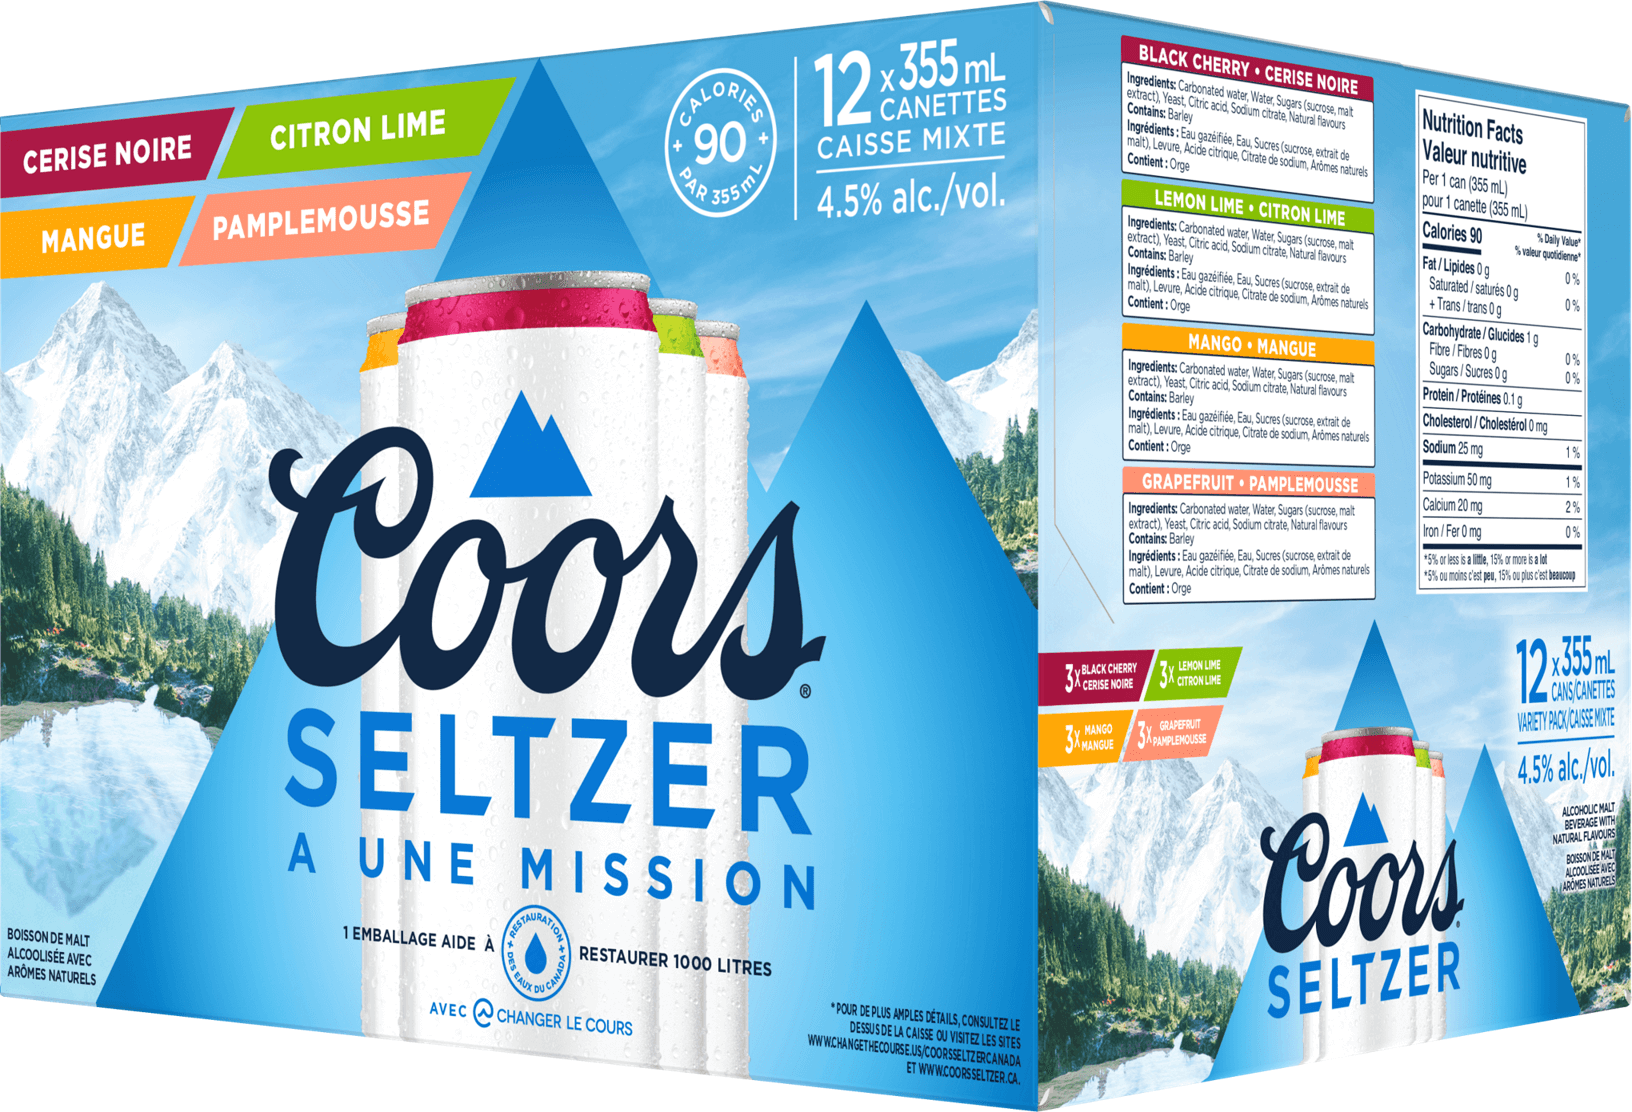 Coors Seltzer